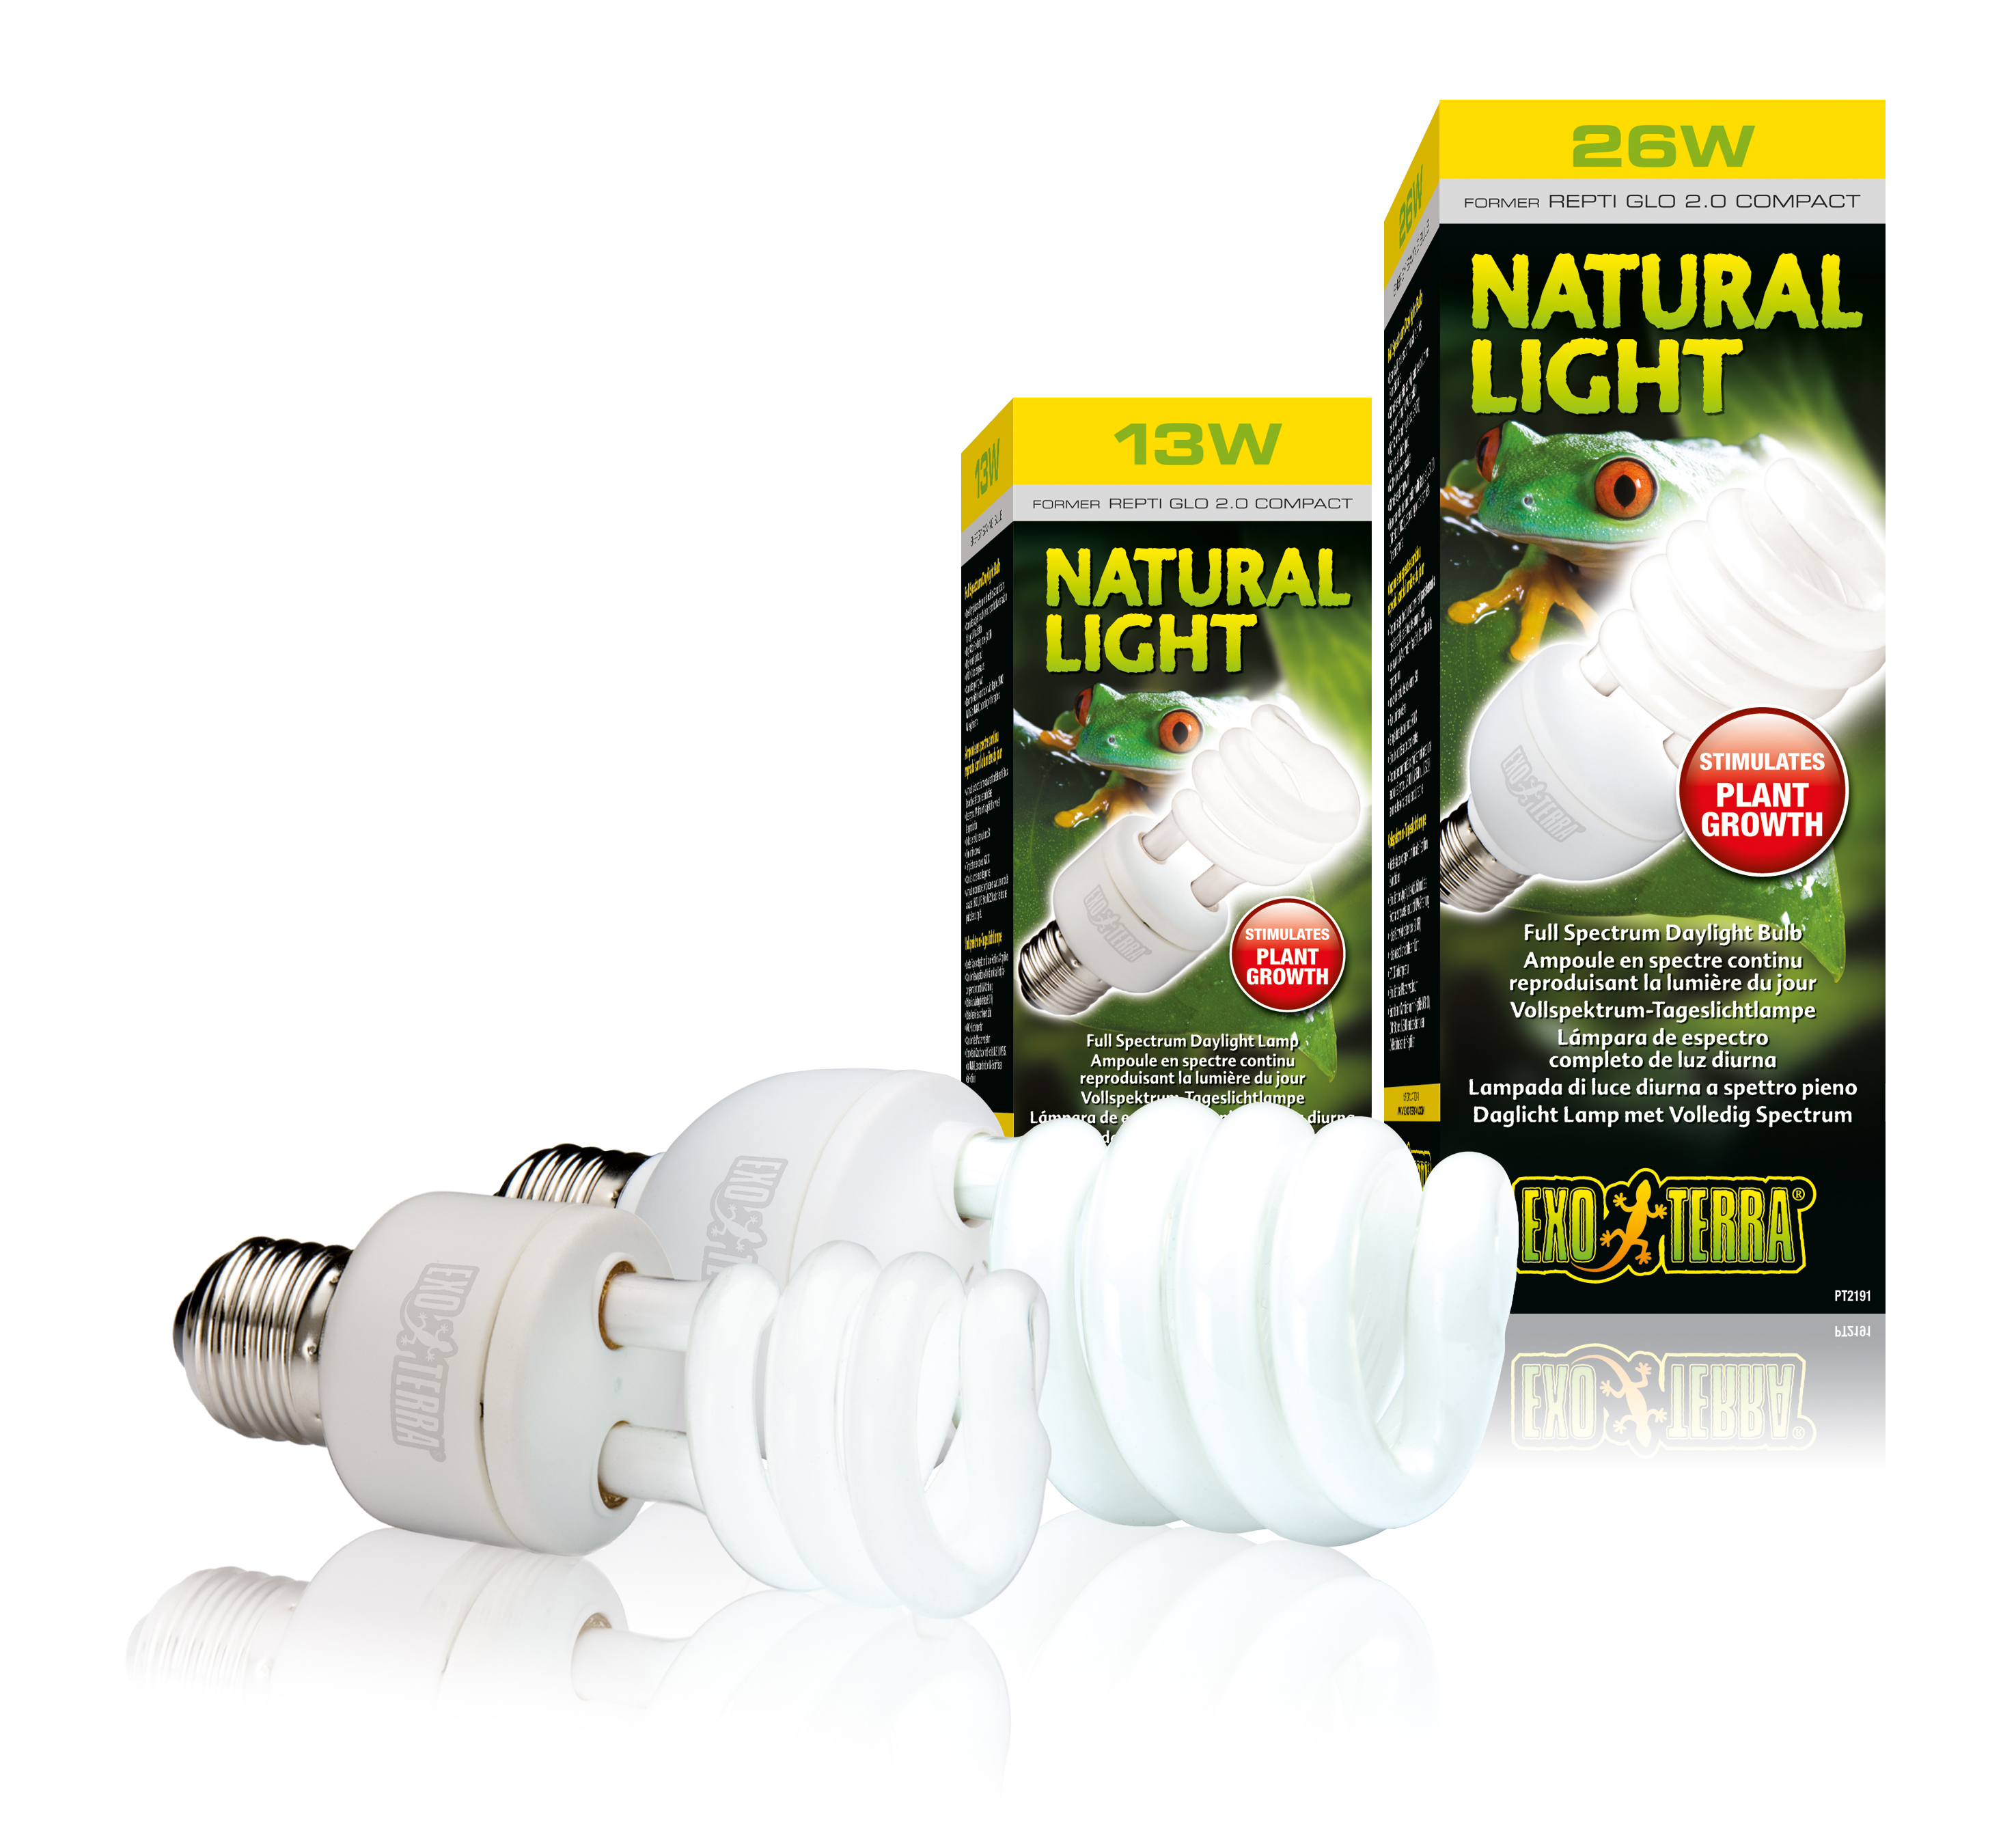 Ex natural light full spectrum lamp - <Product shot>